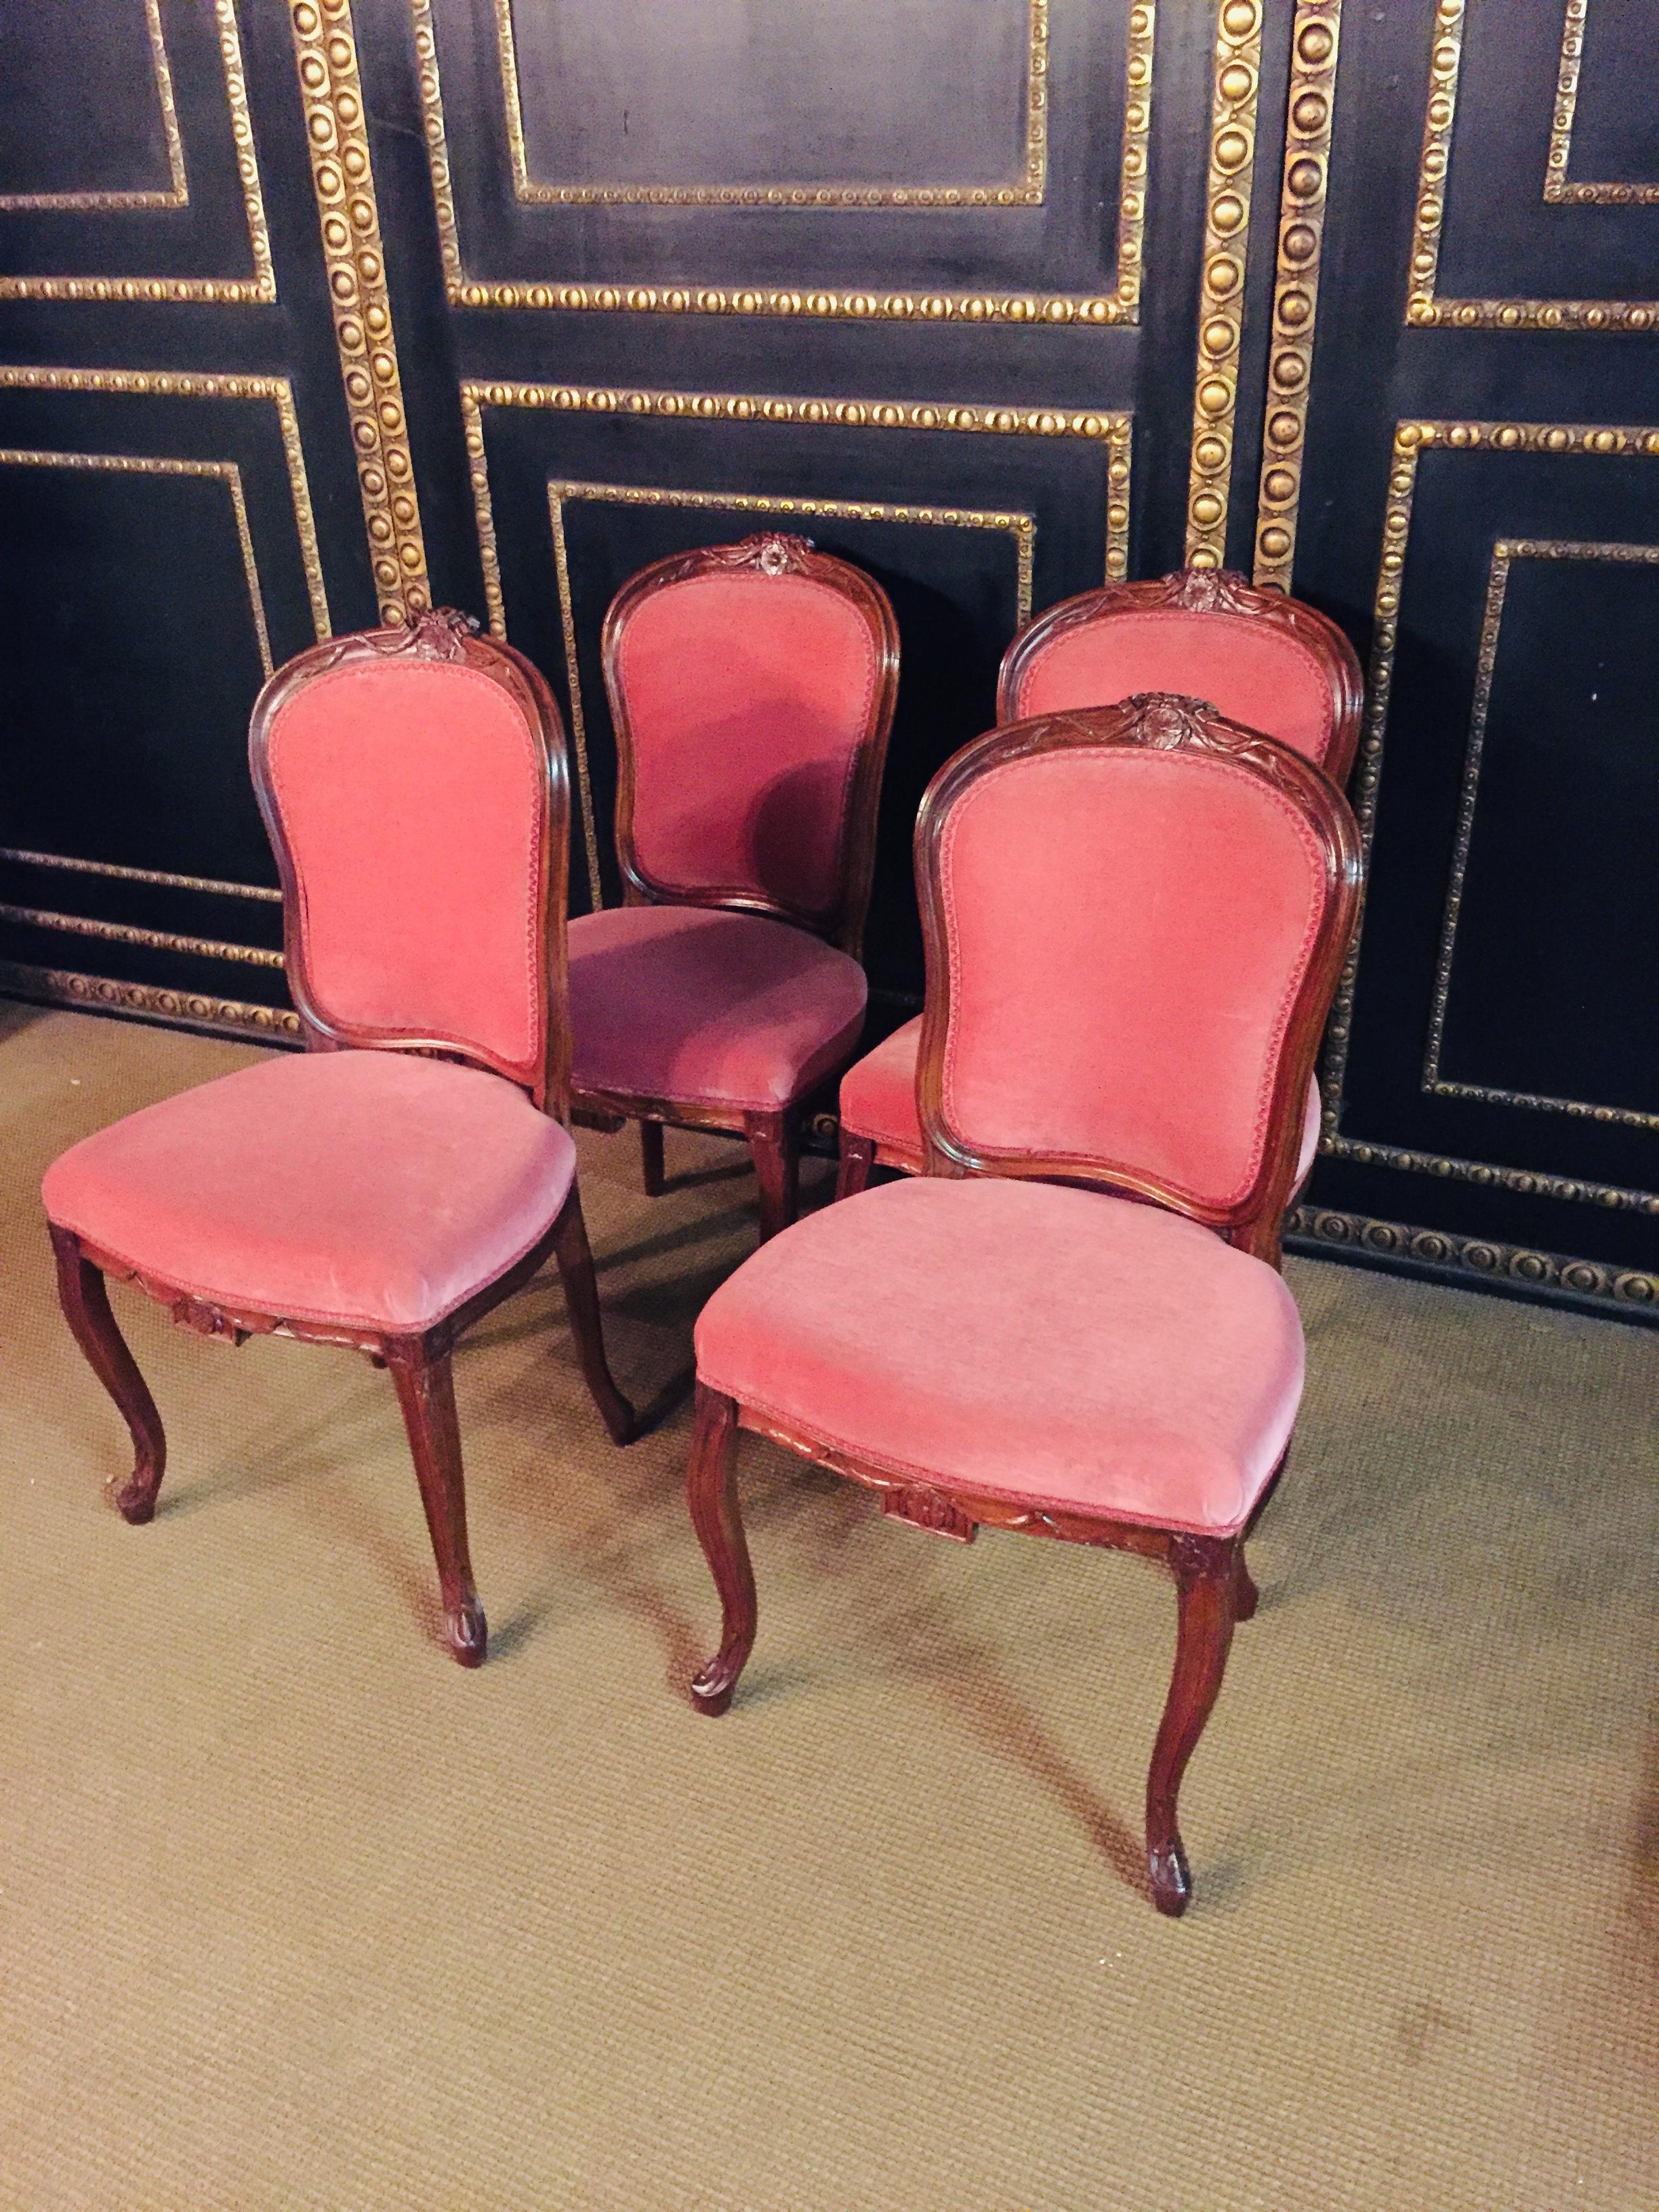 French Four Louis Seize Chairs, circa 1850-1880